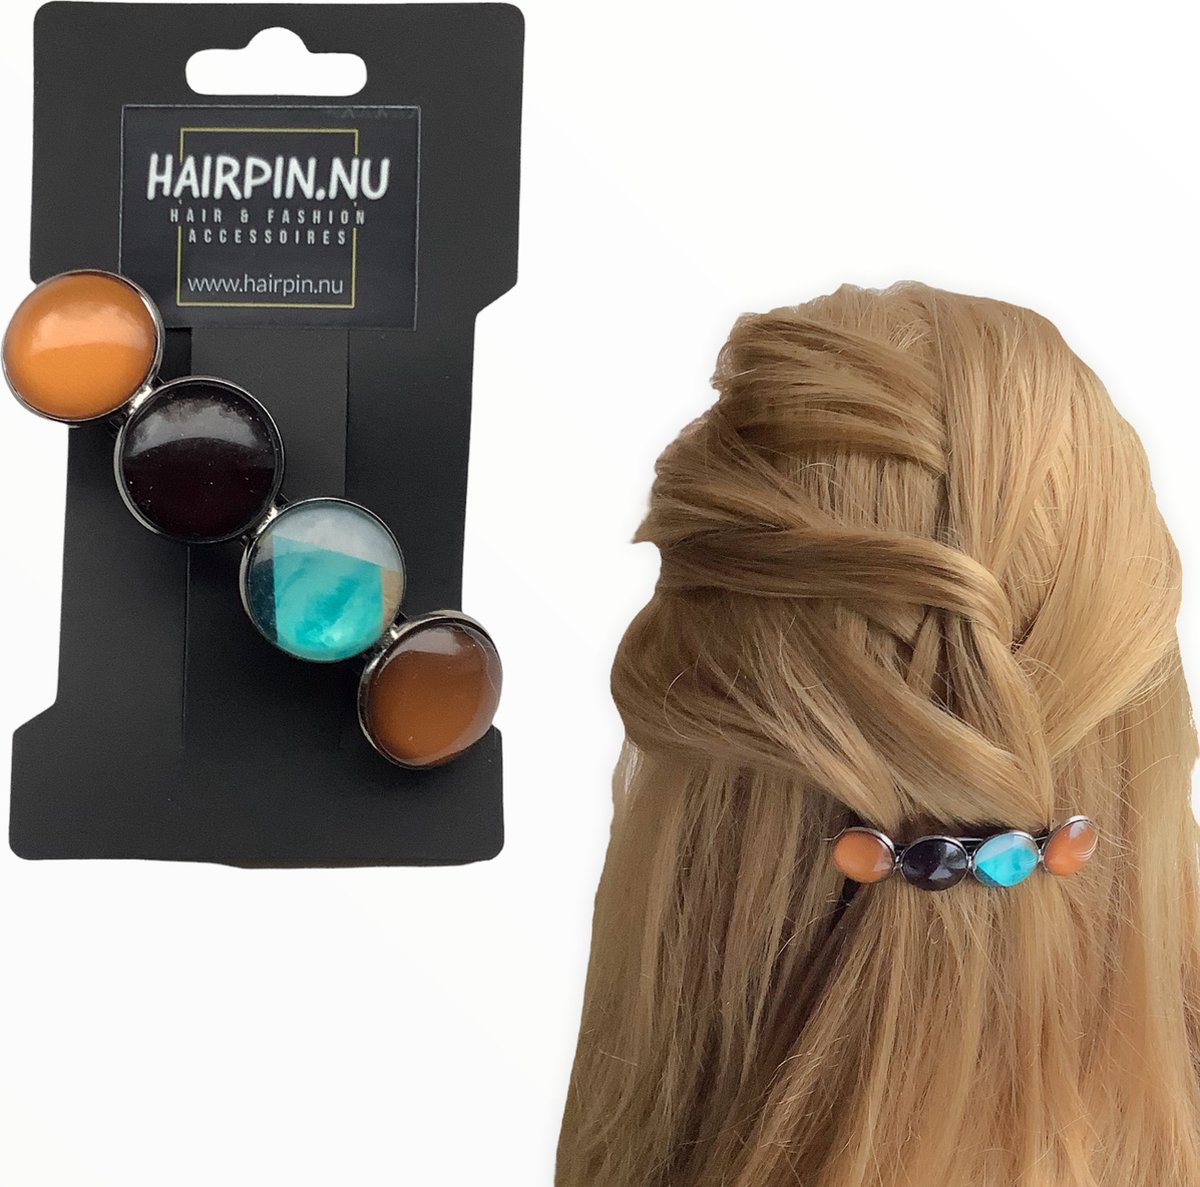 Haarspeld-haarclip-cabochon-bruin-turquoise-Ibiza style-hairpin.nu